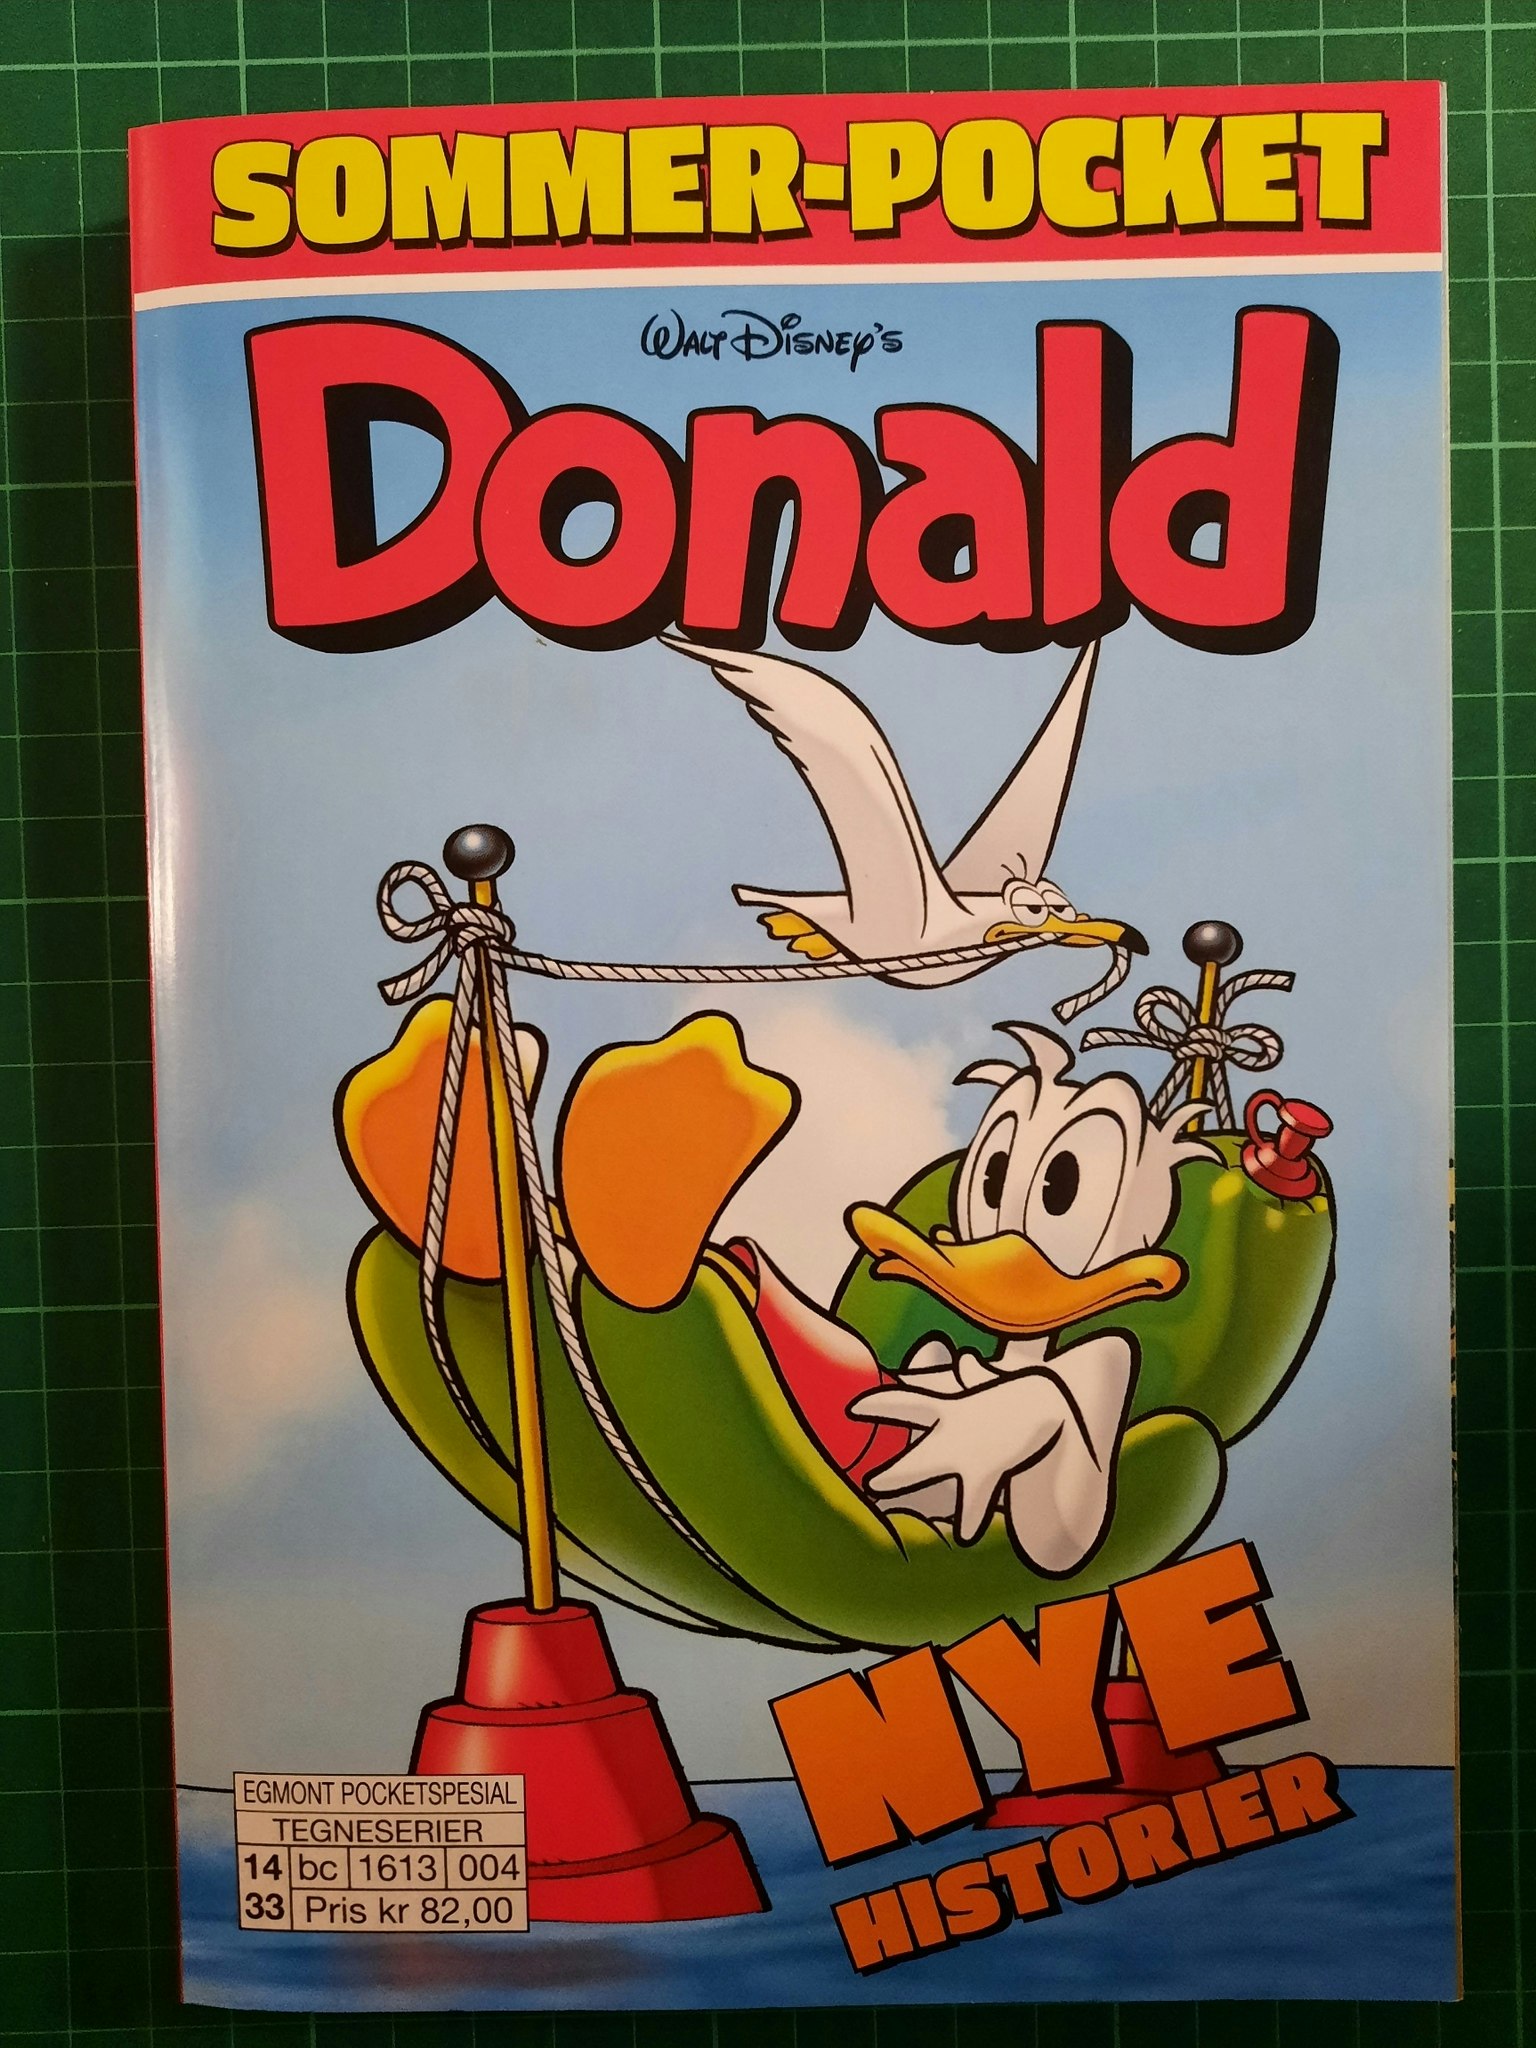 Sommer-pocket Donald 2014